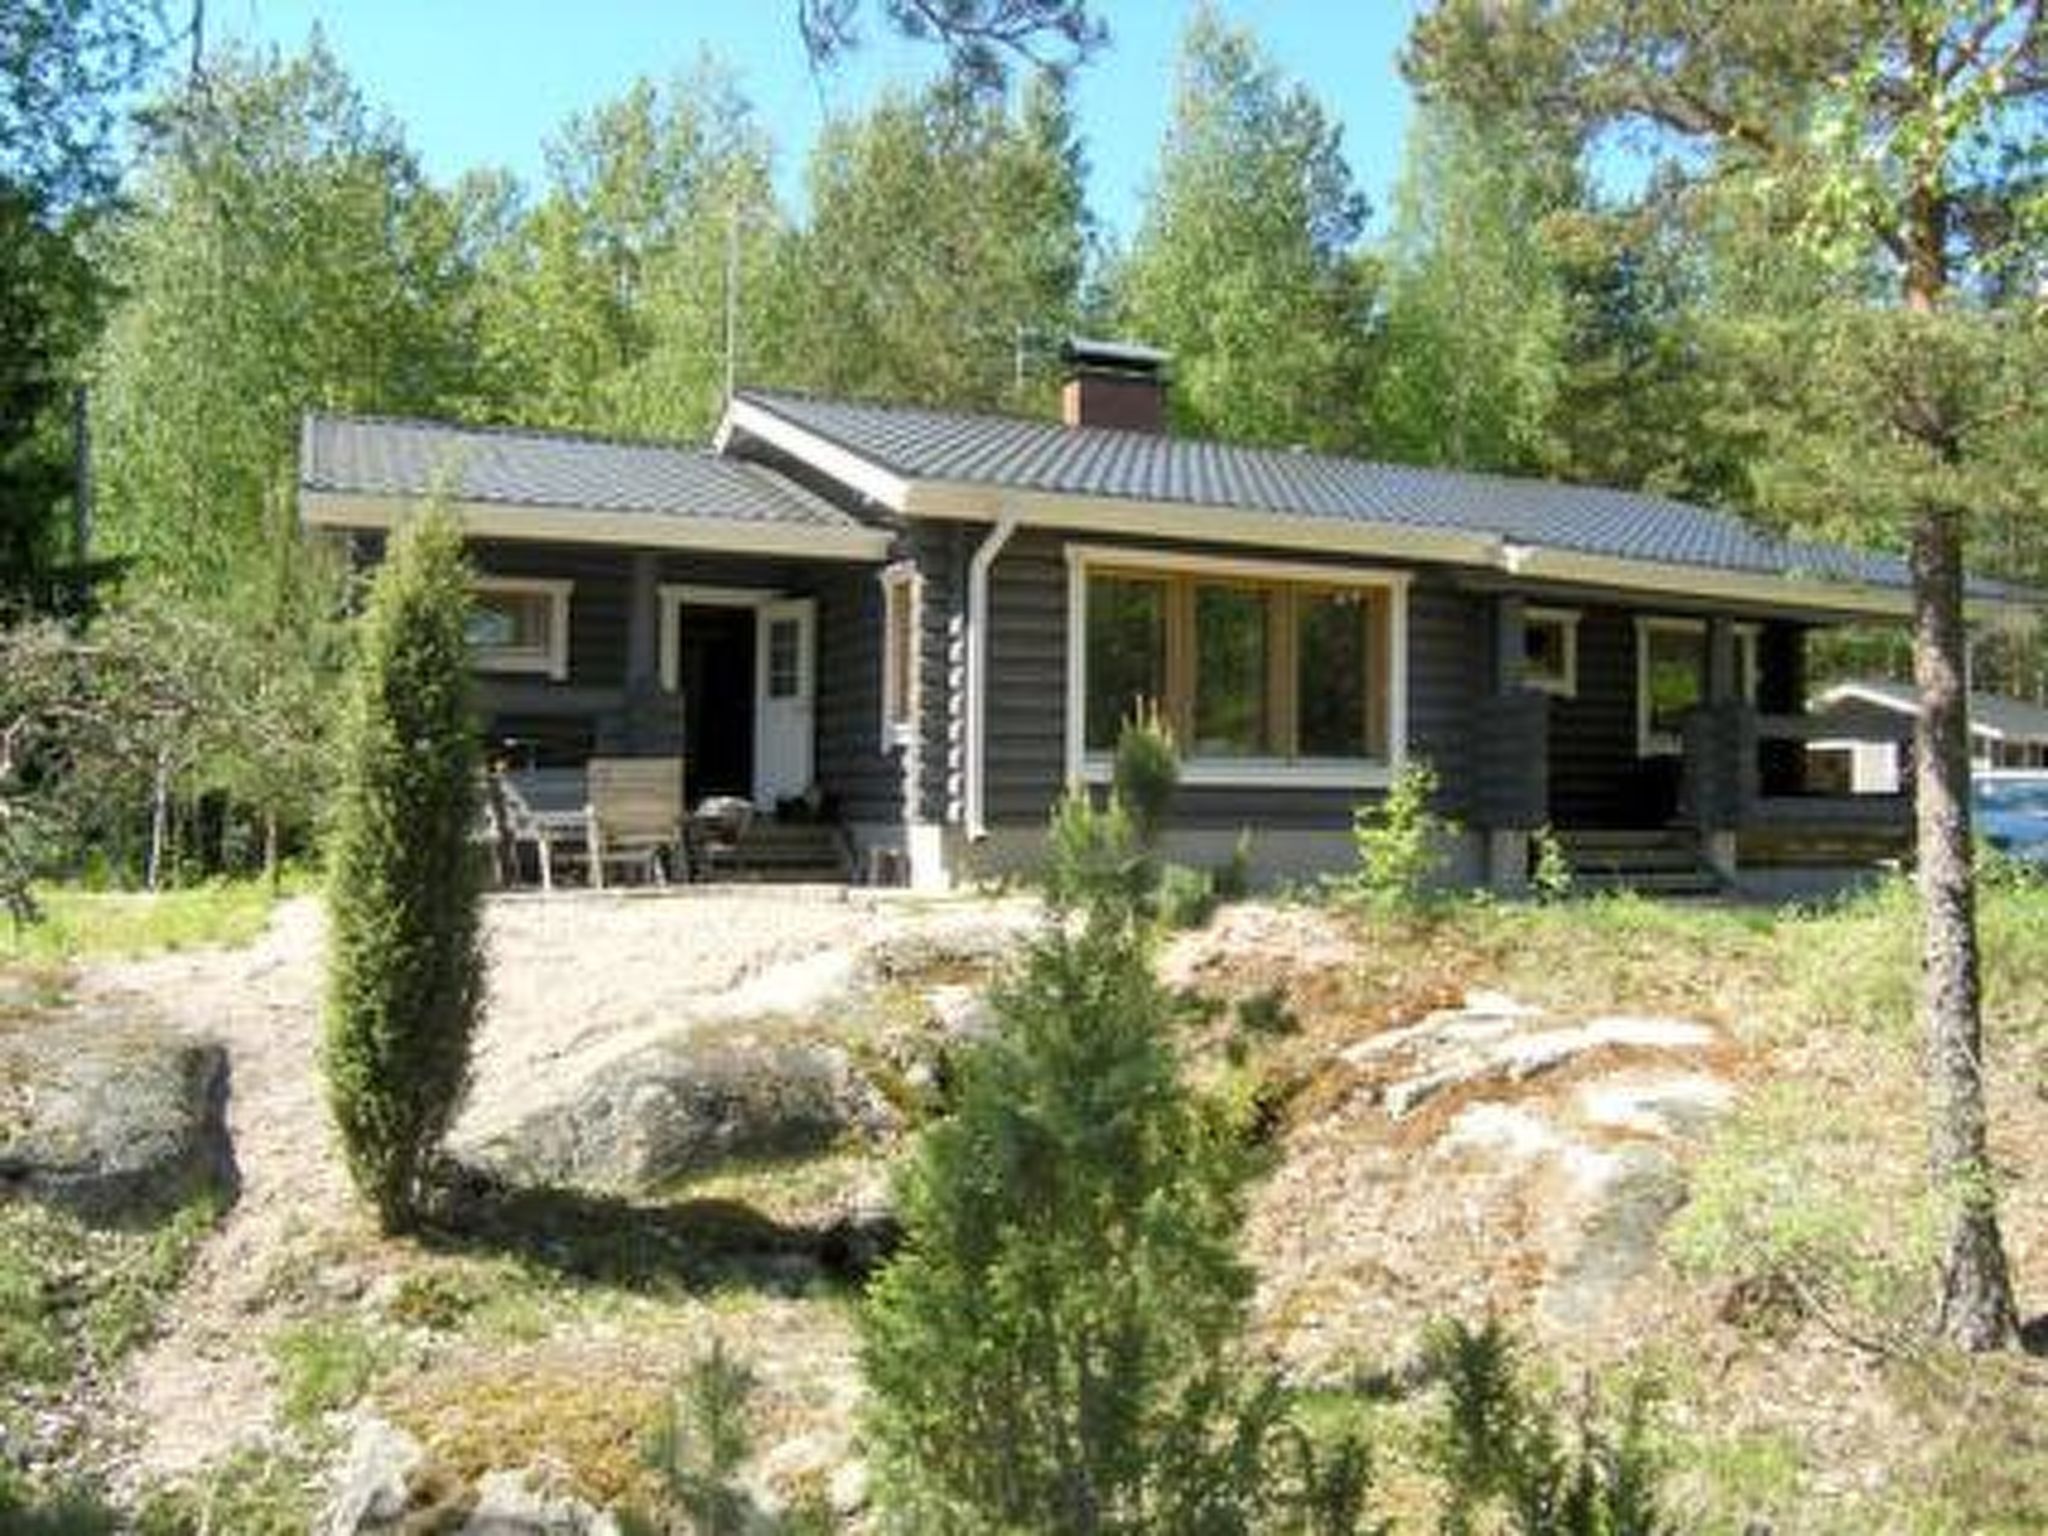 Photo 1 - 2 bedroom House in Kimitoön with sauna